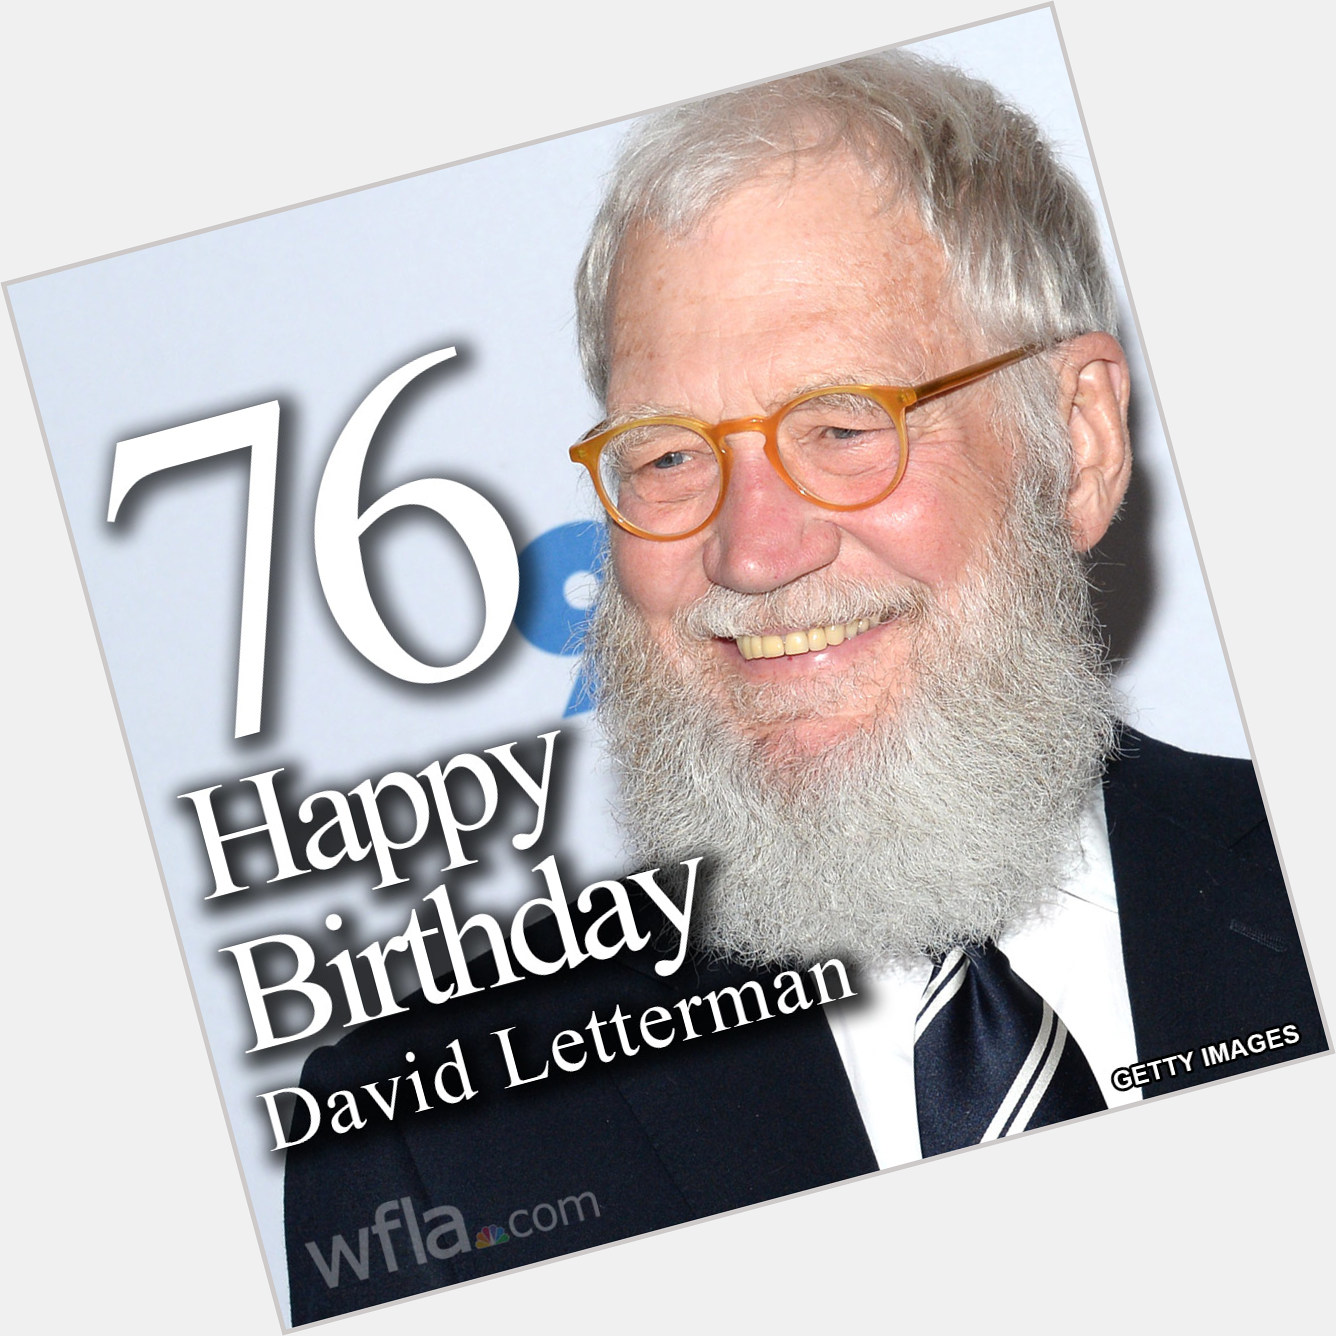 HAPPY BIRTHDAY, DAVID LETTERMAN The legendary late night host turns 76 today!  